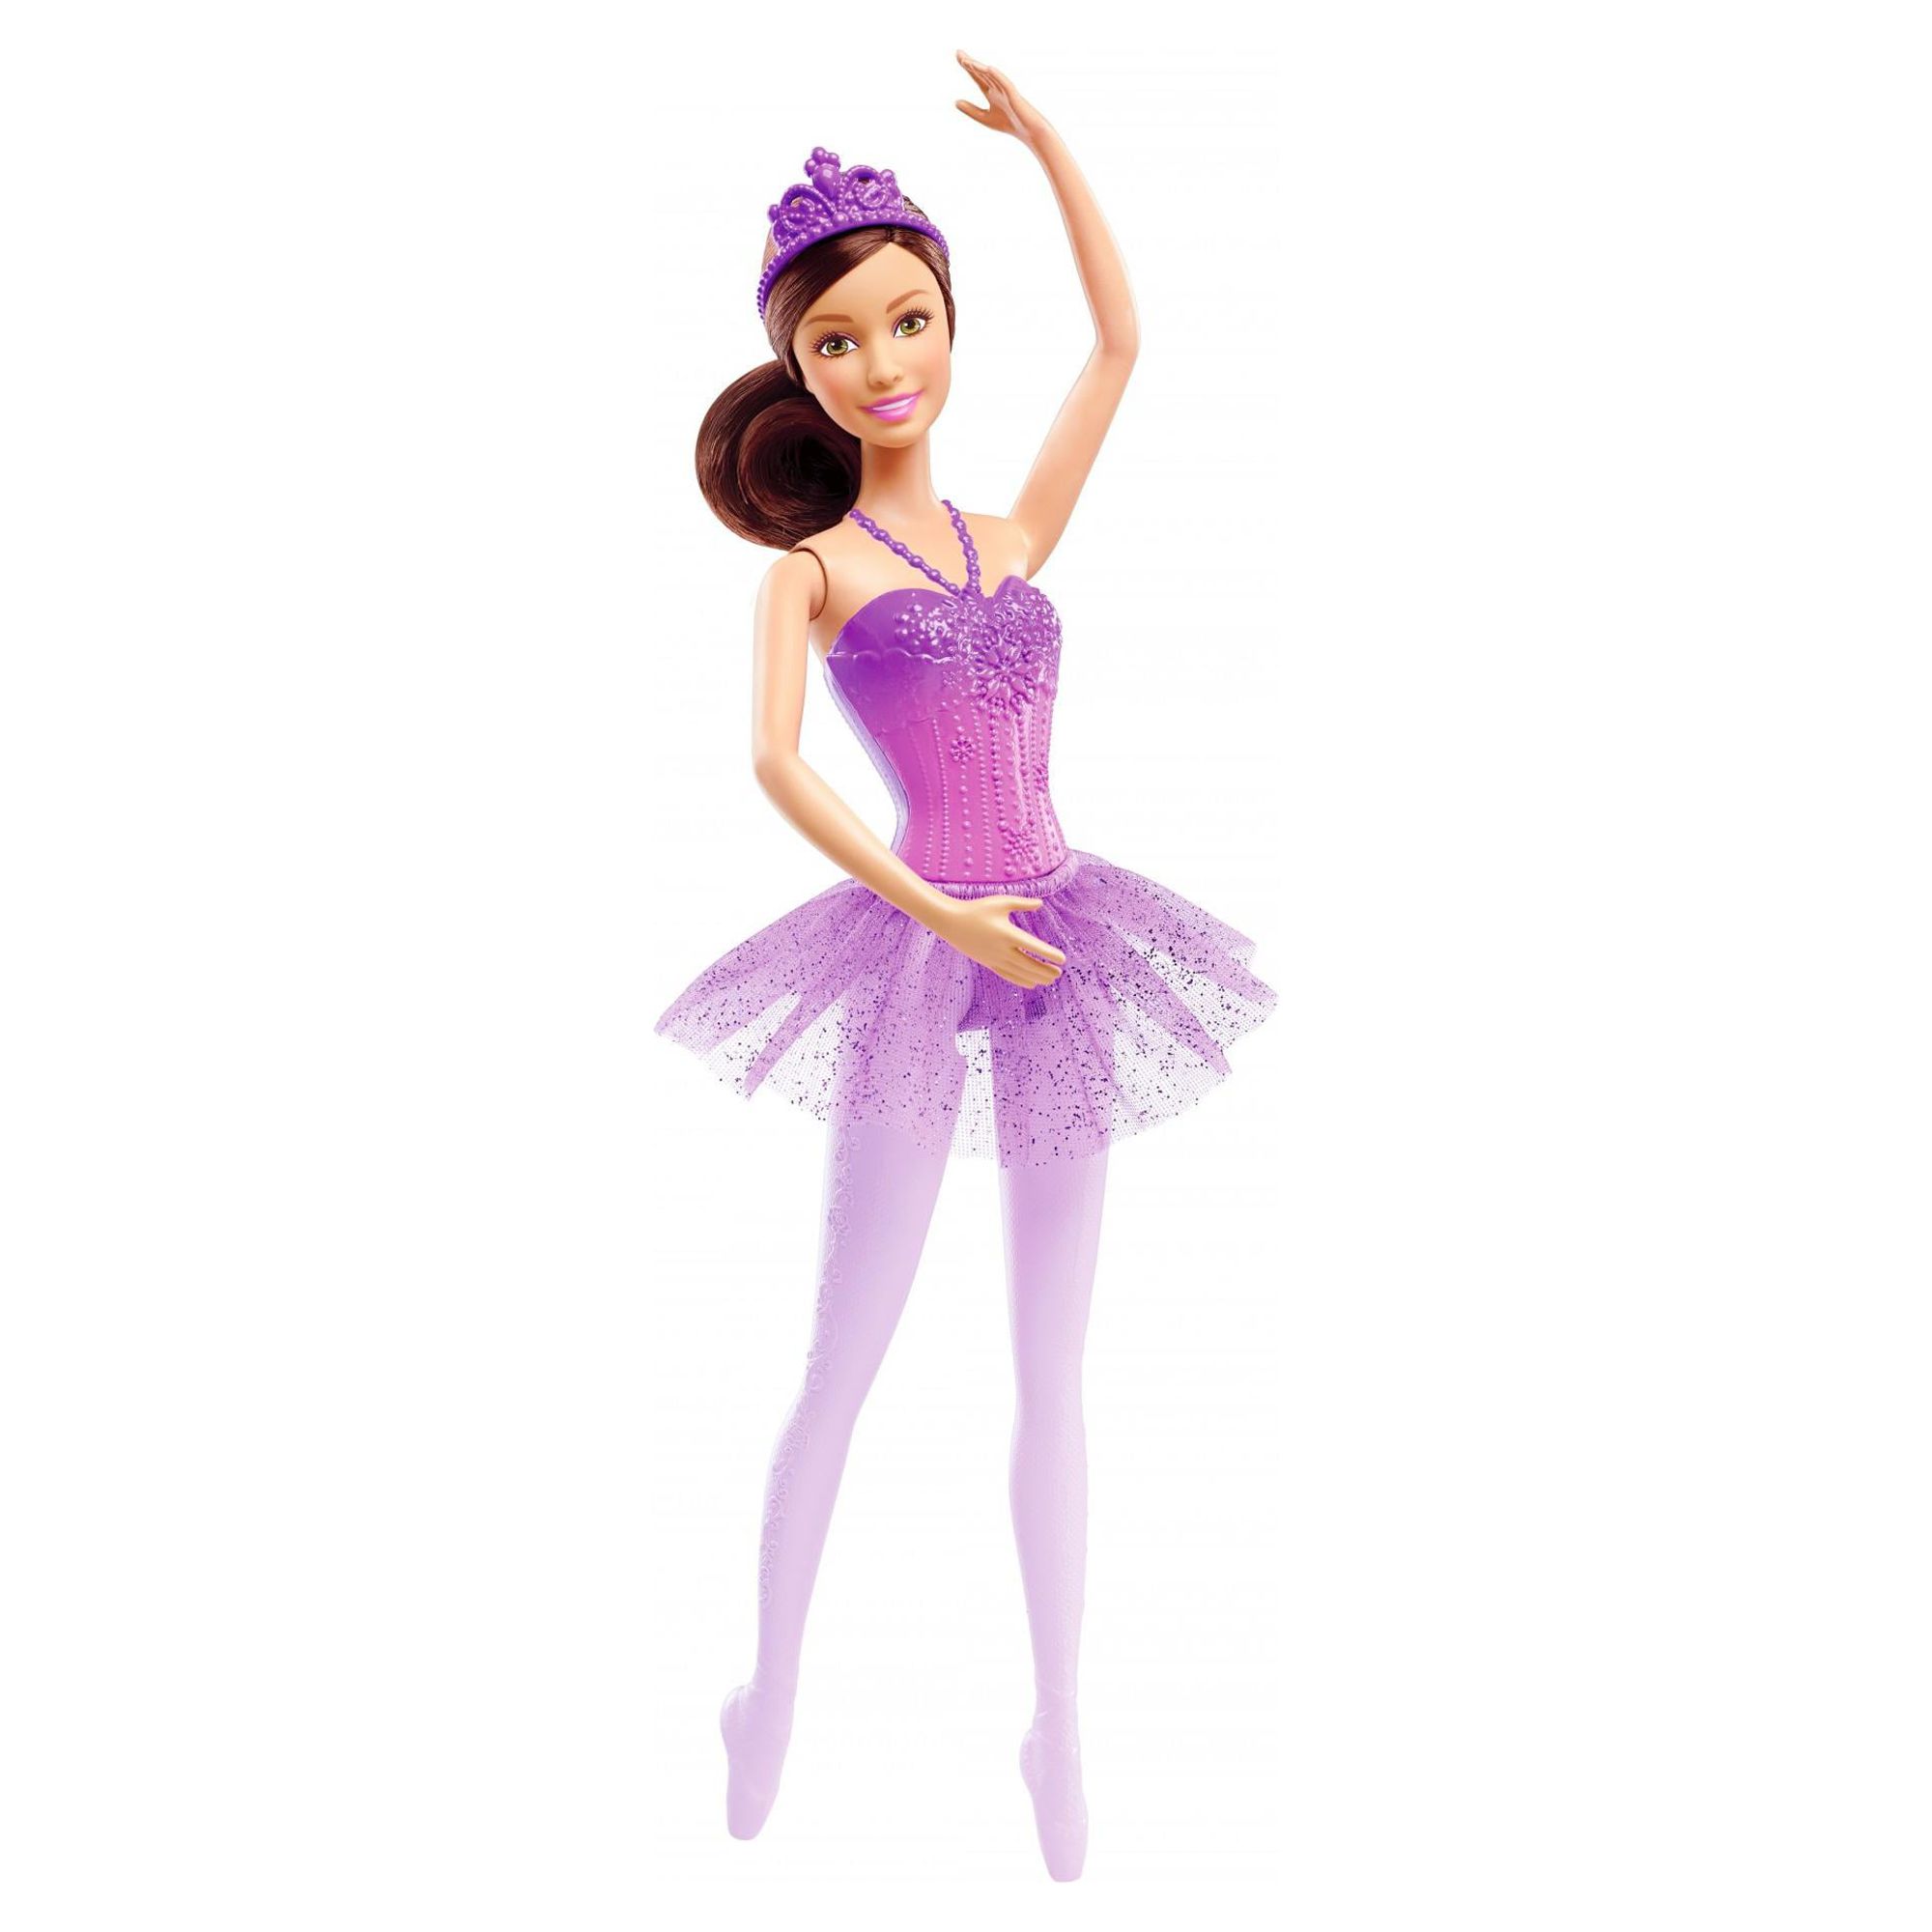 Barbie Ballerina Doll with Removable Purple Tutu & Tiara - image 4 of 6